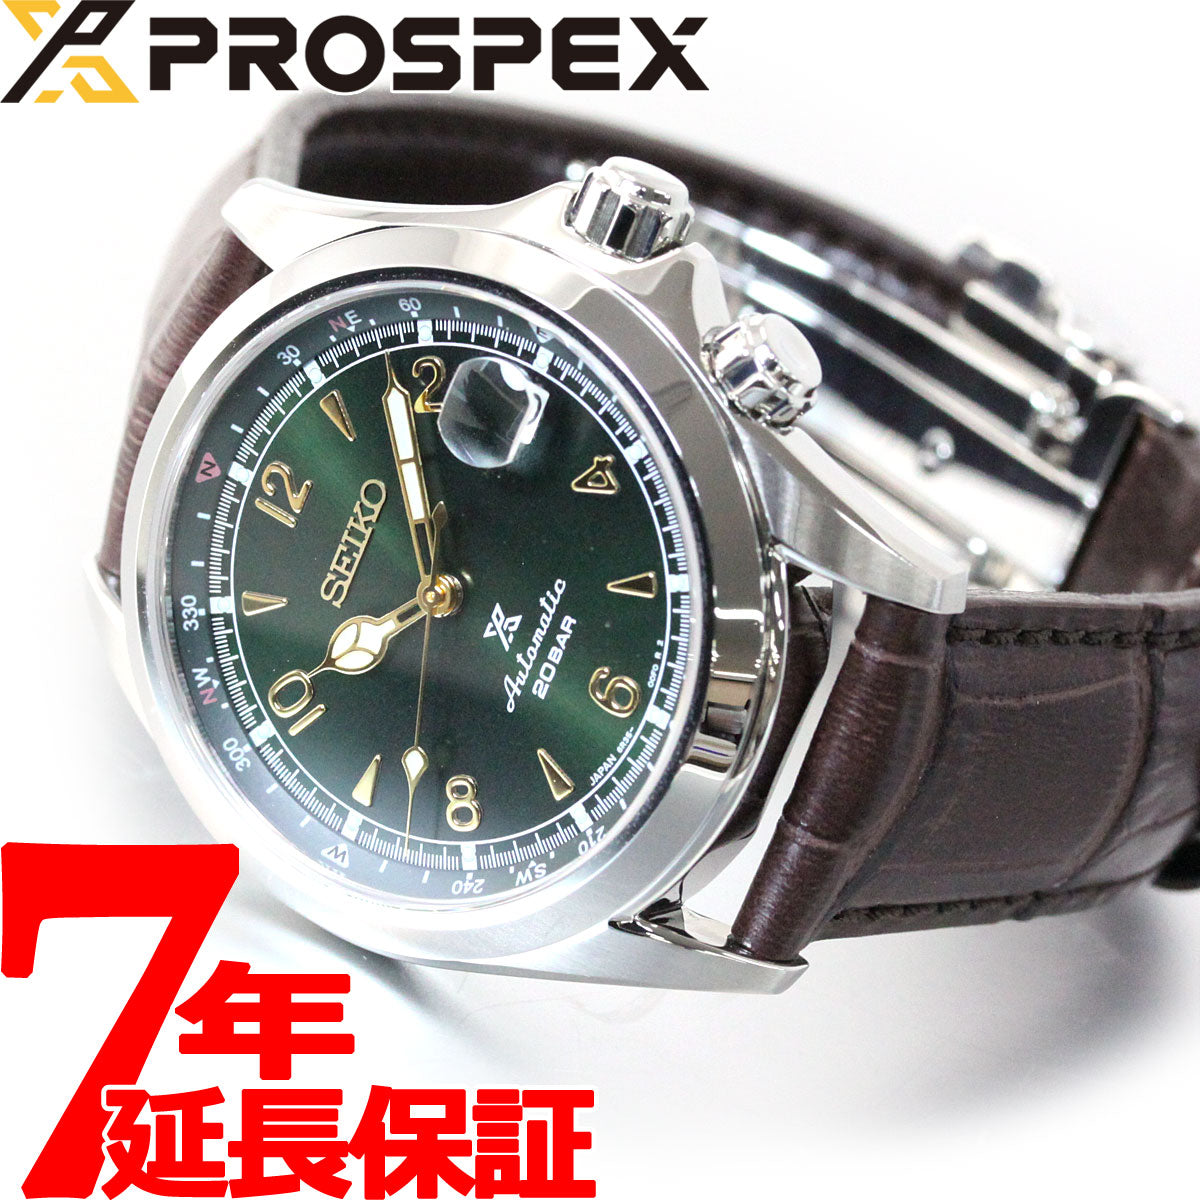 SEIKO プロスペックス アルピニスト SBDC091  自動巻メンズ腕時計1500円引きでしたら可能です